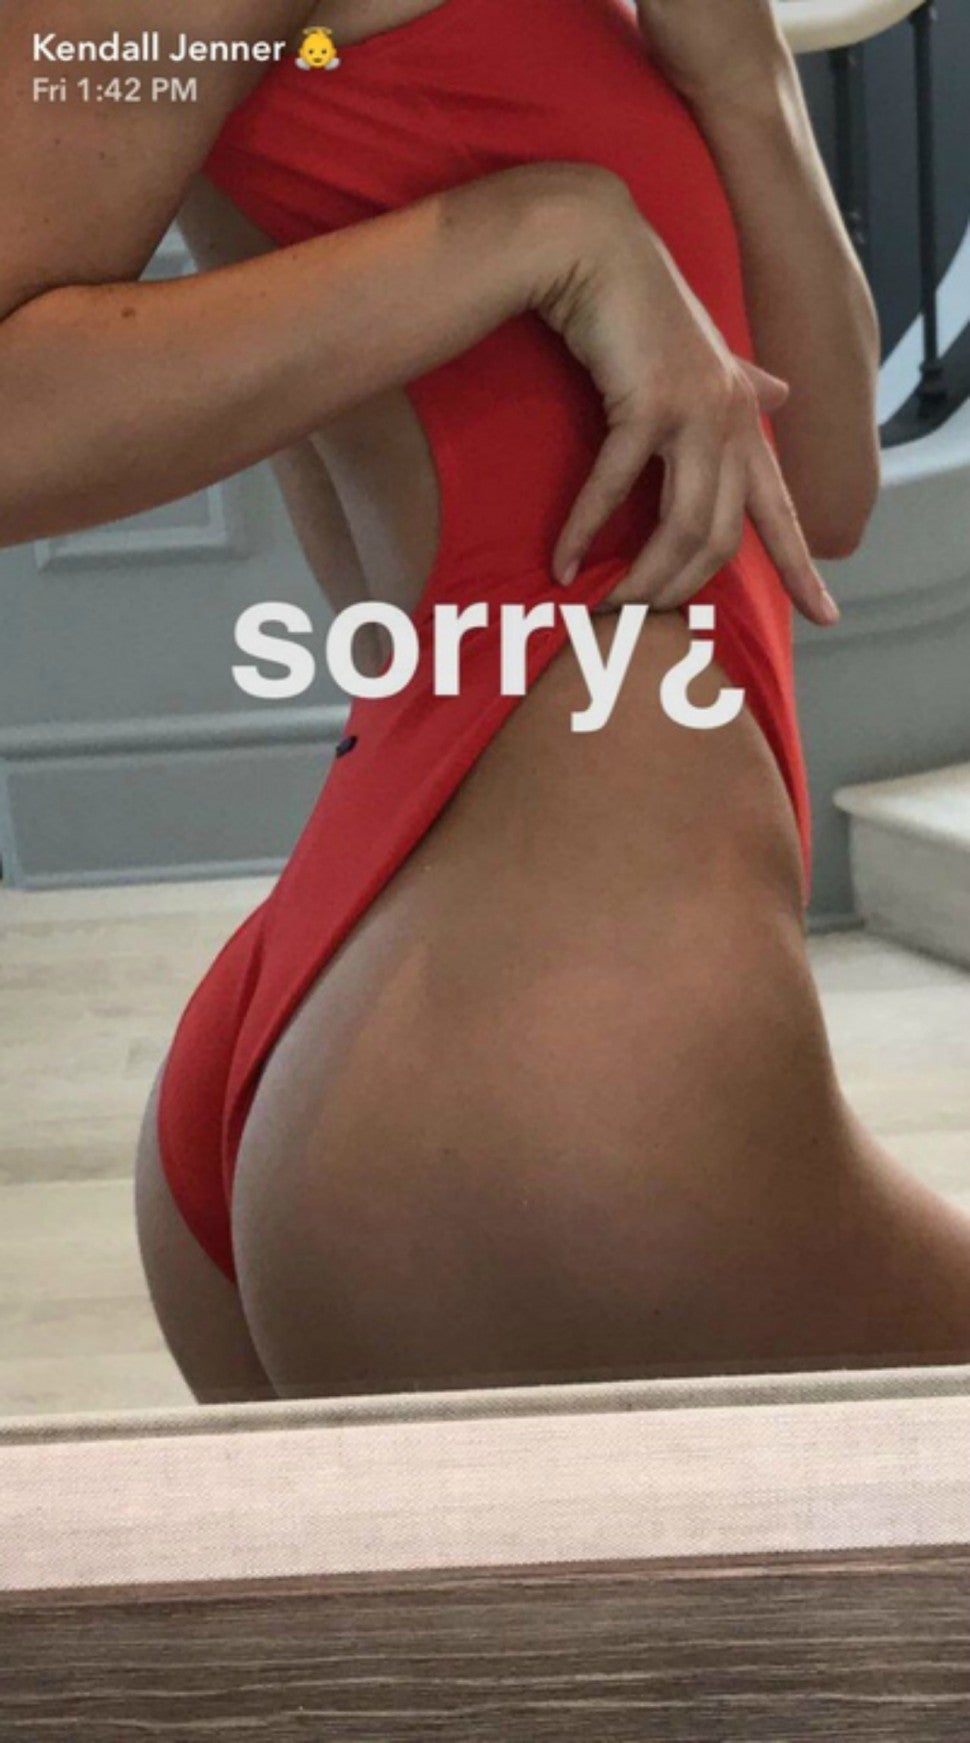 Booty Pics Snapchat